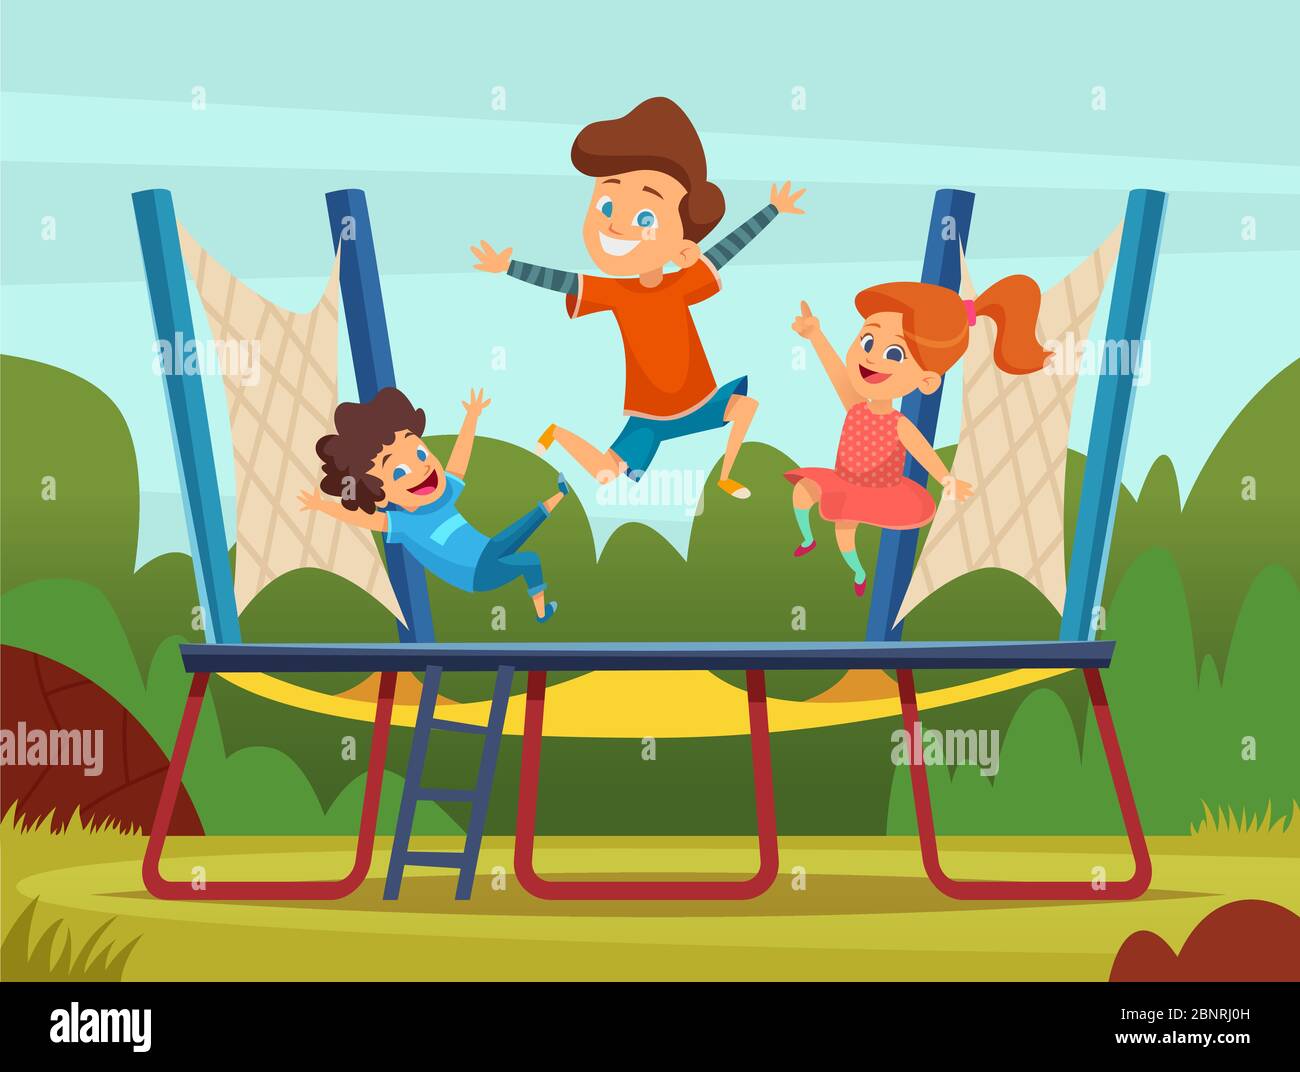 Jumping trampoline kids. Active children games on playground vector cartoon background Stock Vector